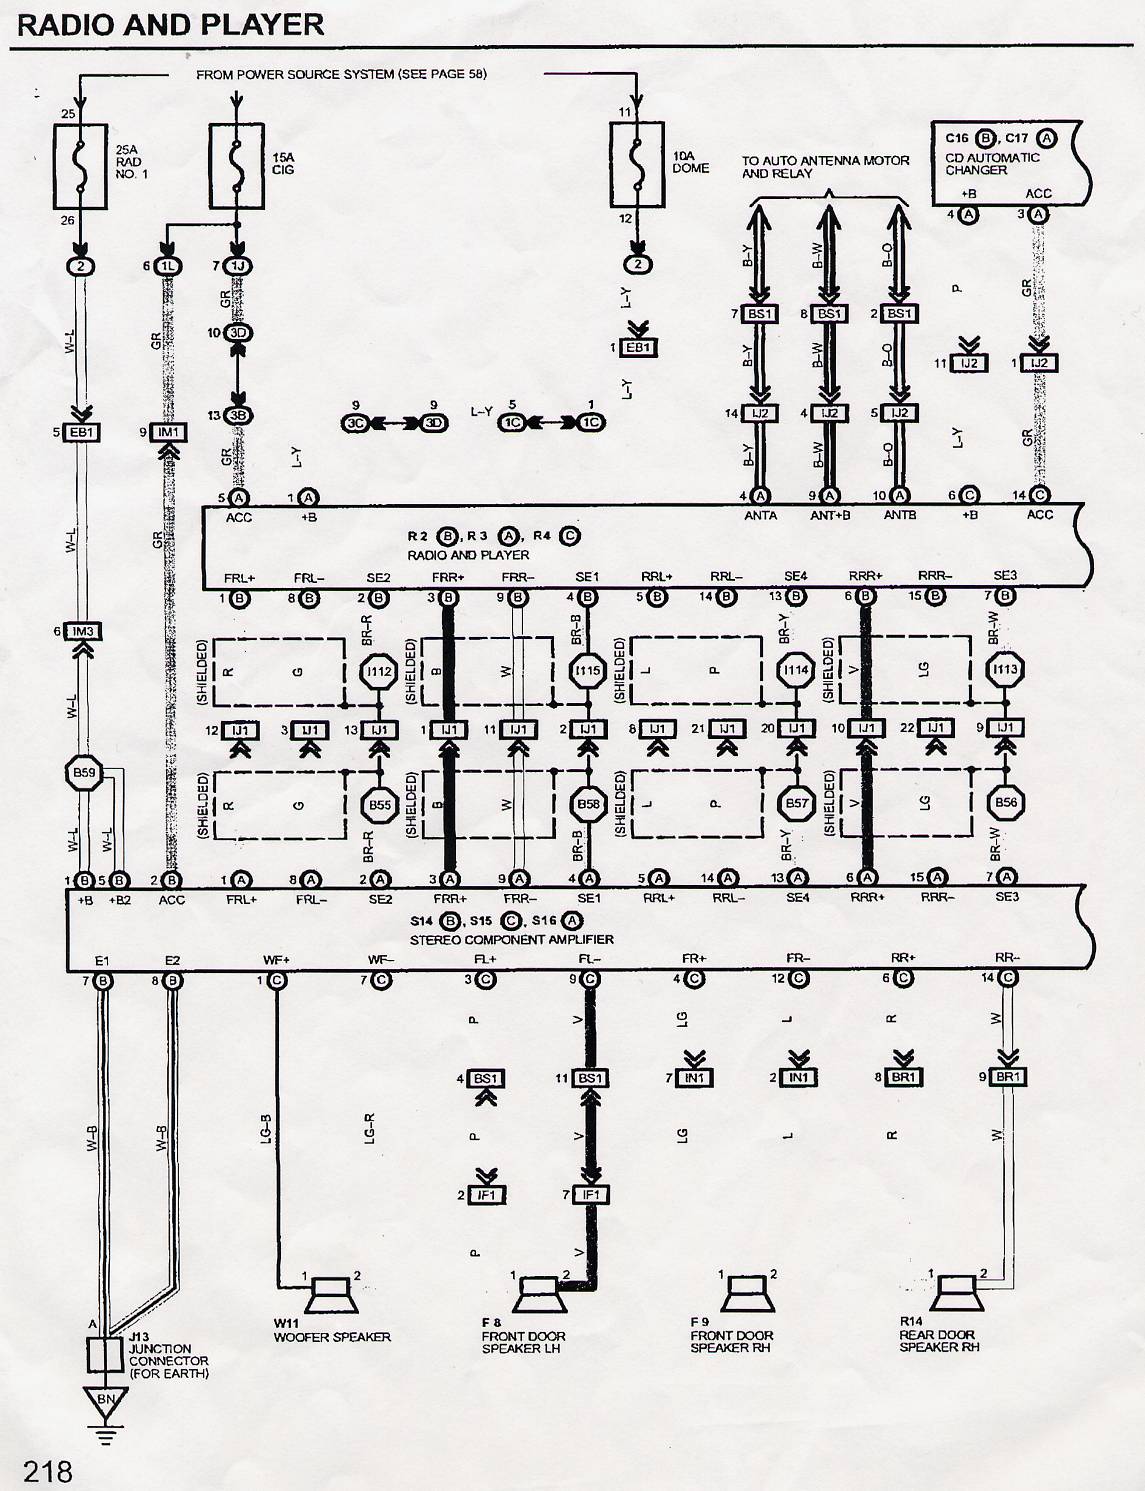 ac9001k first generation wiring diagram